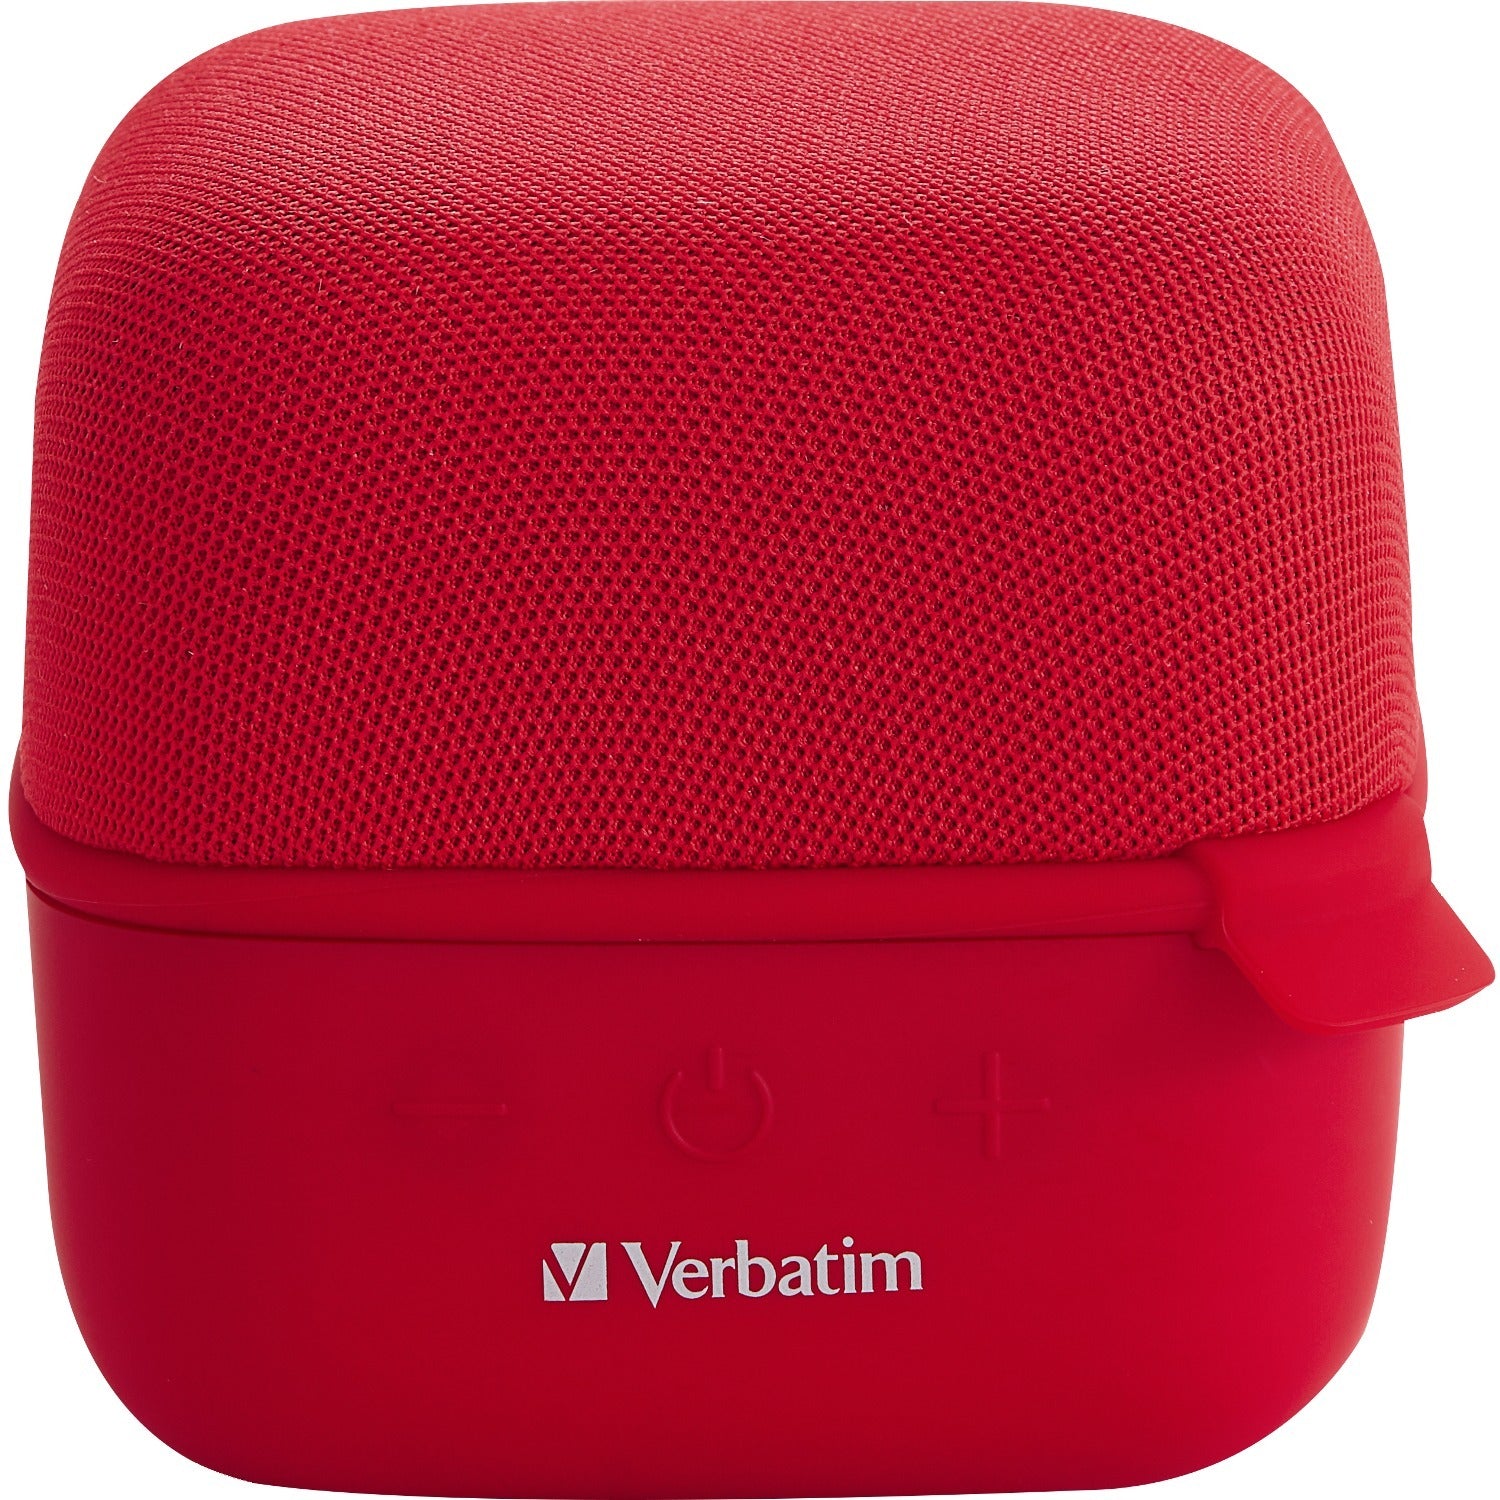 verbatim-bluetooth-speaker-system-red-100-hz-to-20-khz-truewireless-stereo-battery-rechargeable-1-pack_ver70225 - 2